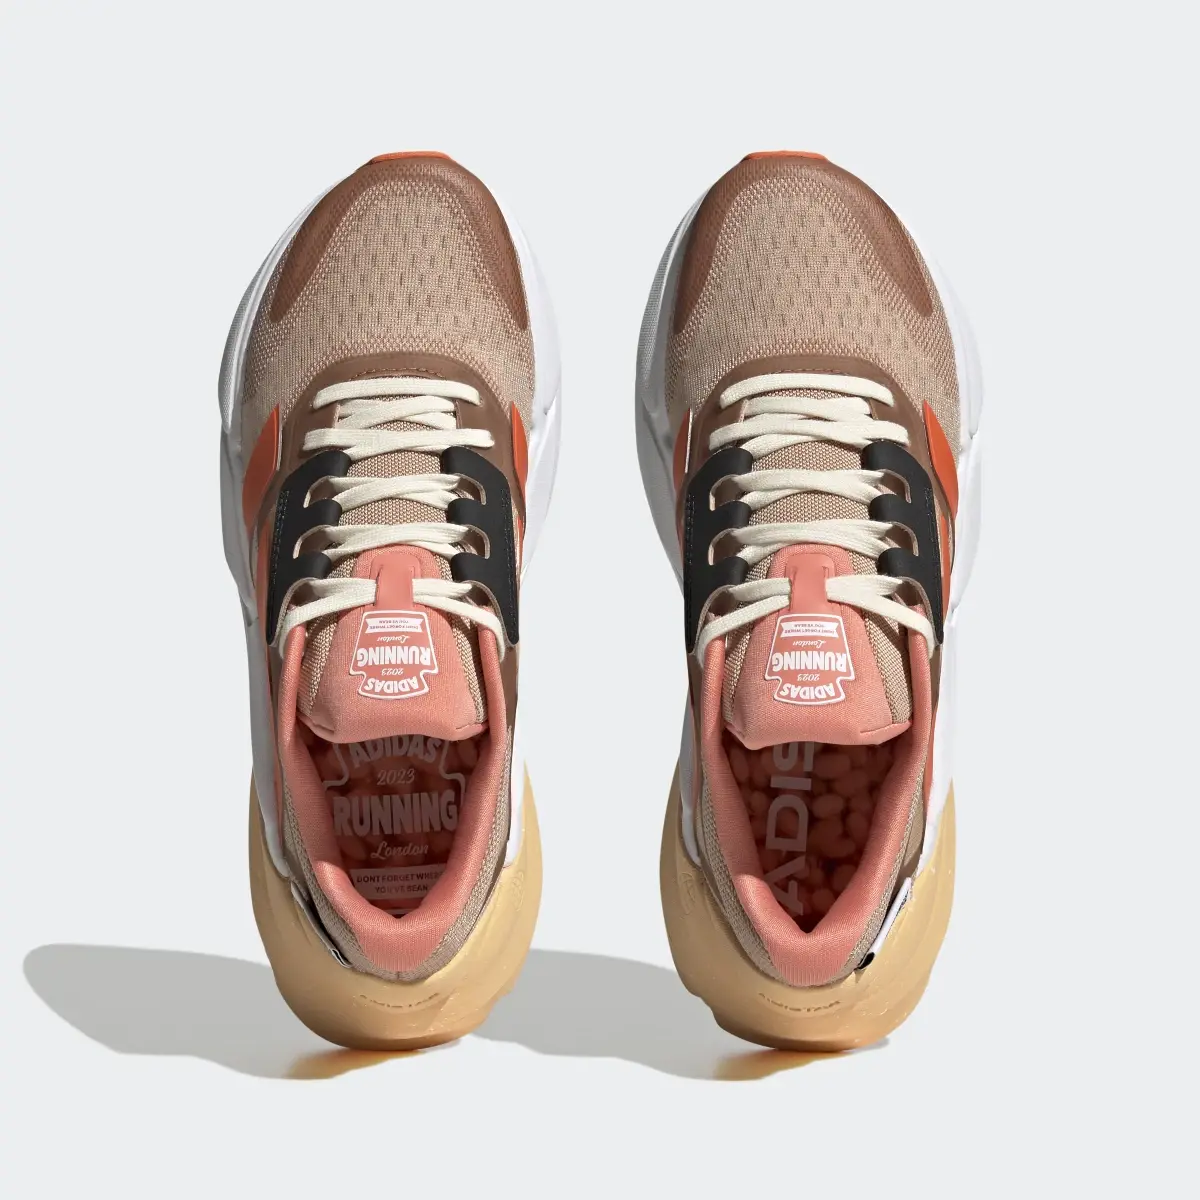 Adidas Adistar 2.0 Shoes. 3